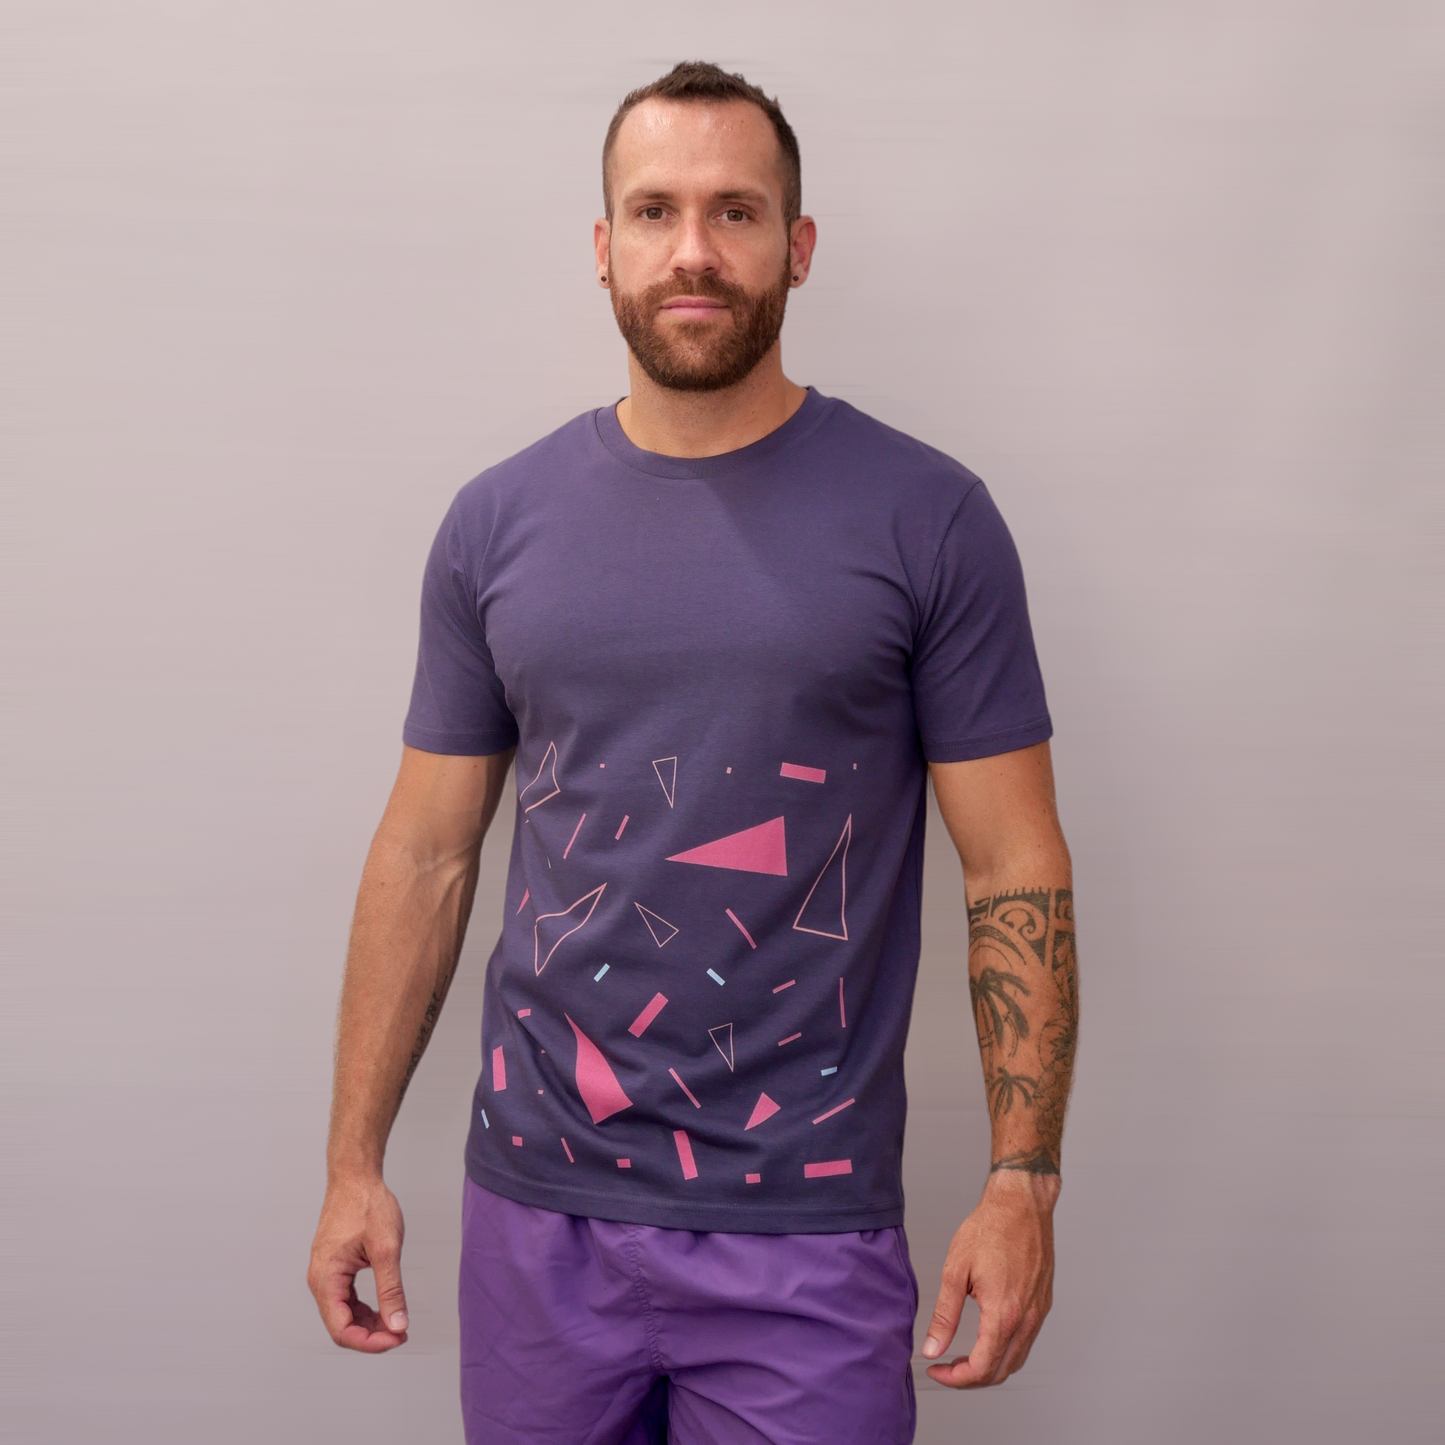 monsieurbarr t-shirt violet impression style 90